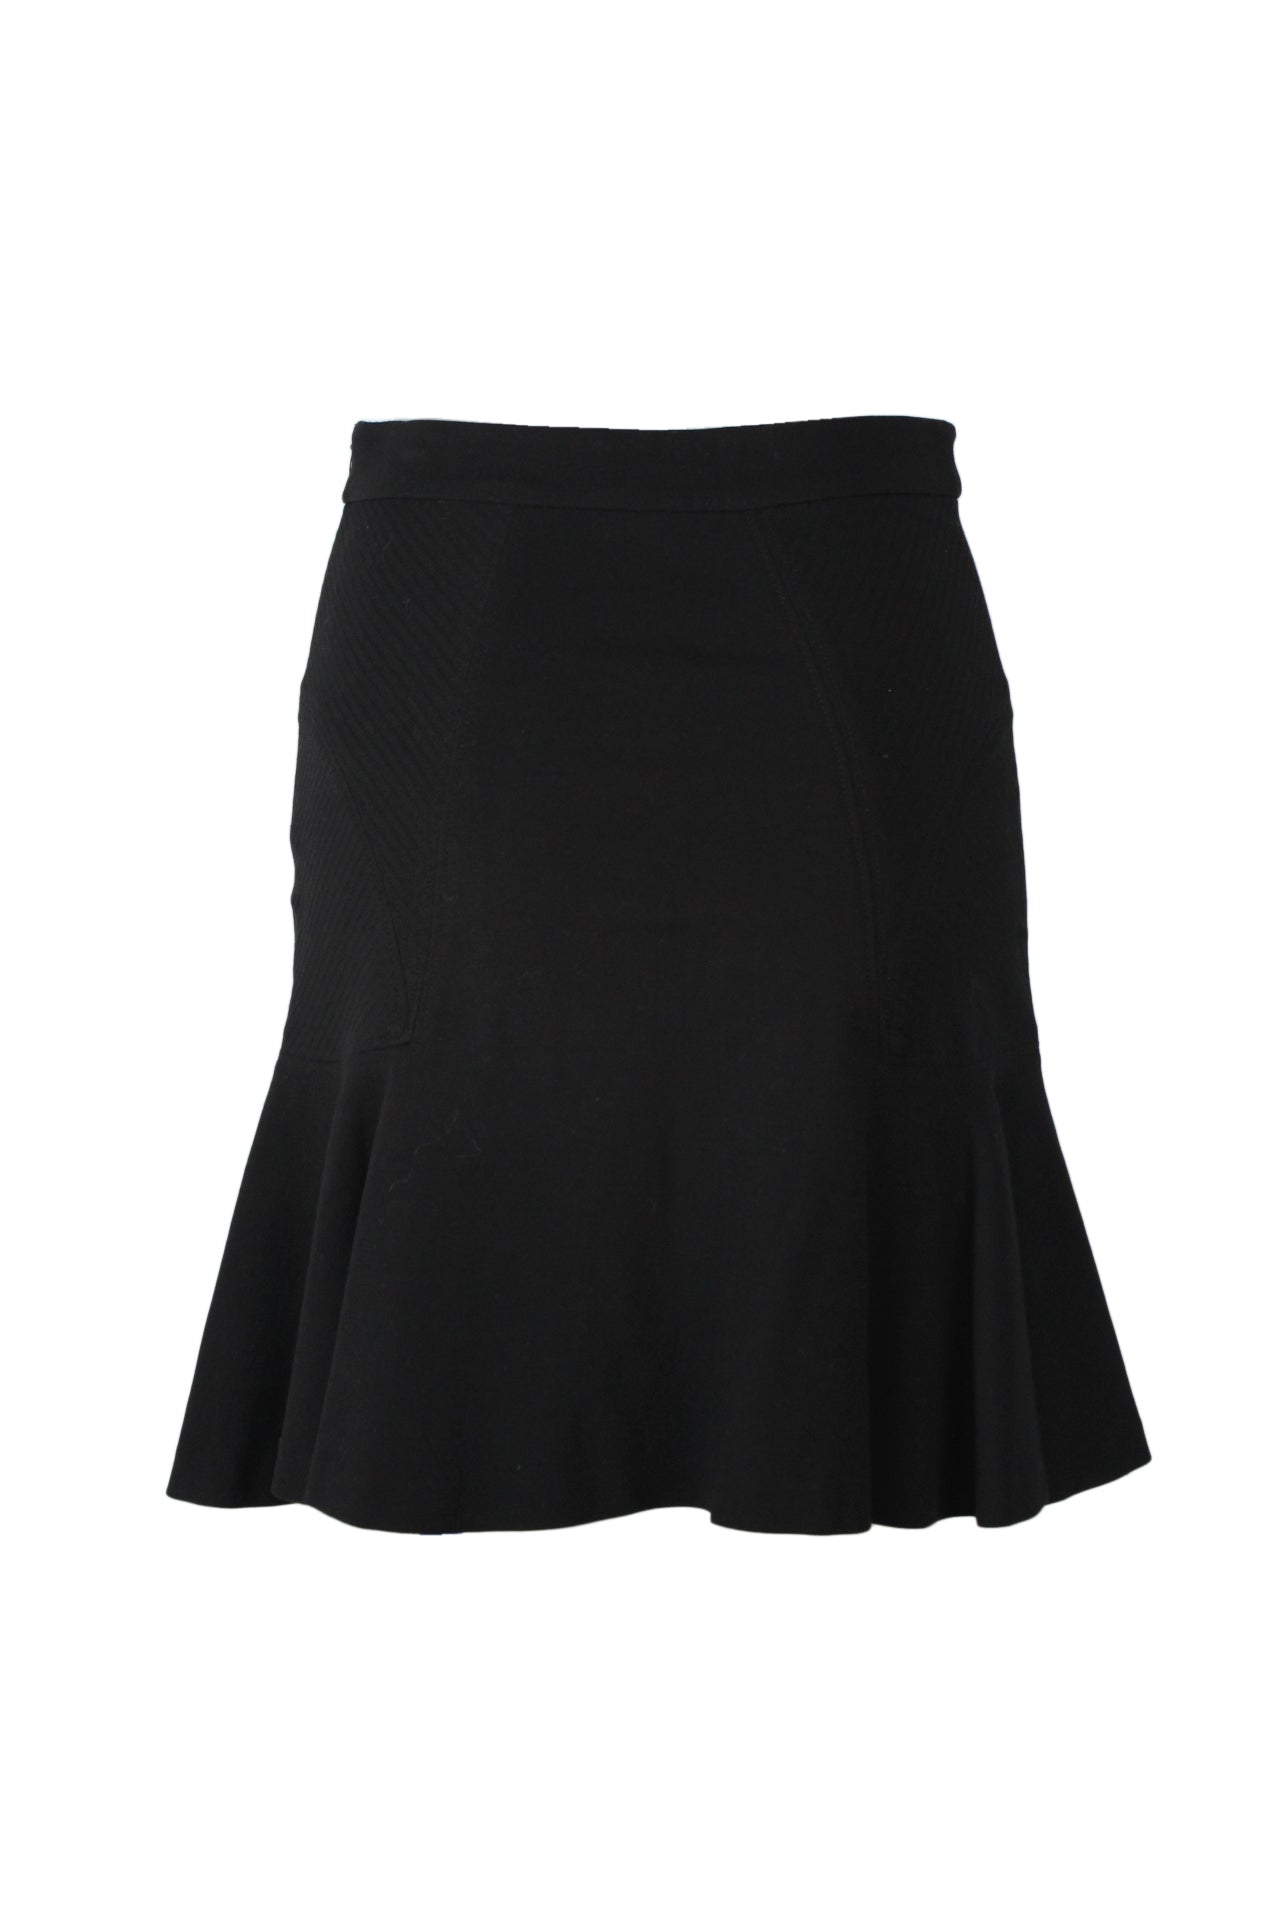 back angle of diane von furstenberg black knit mini skirt.